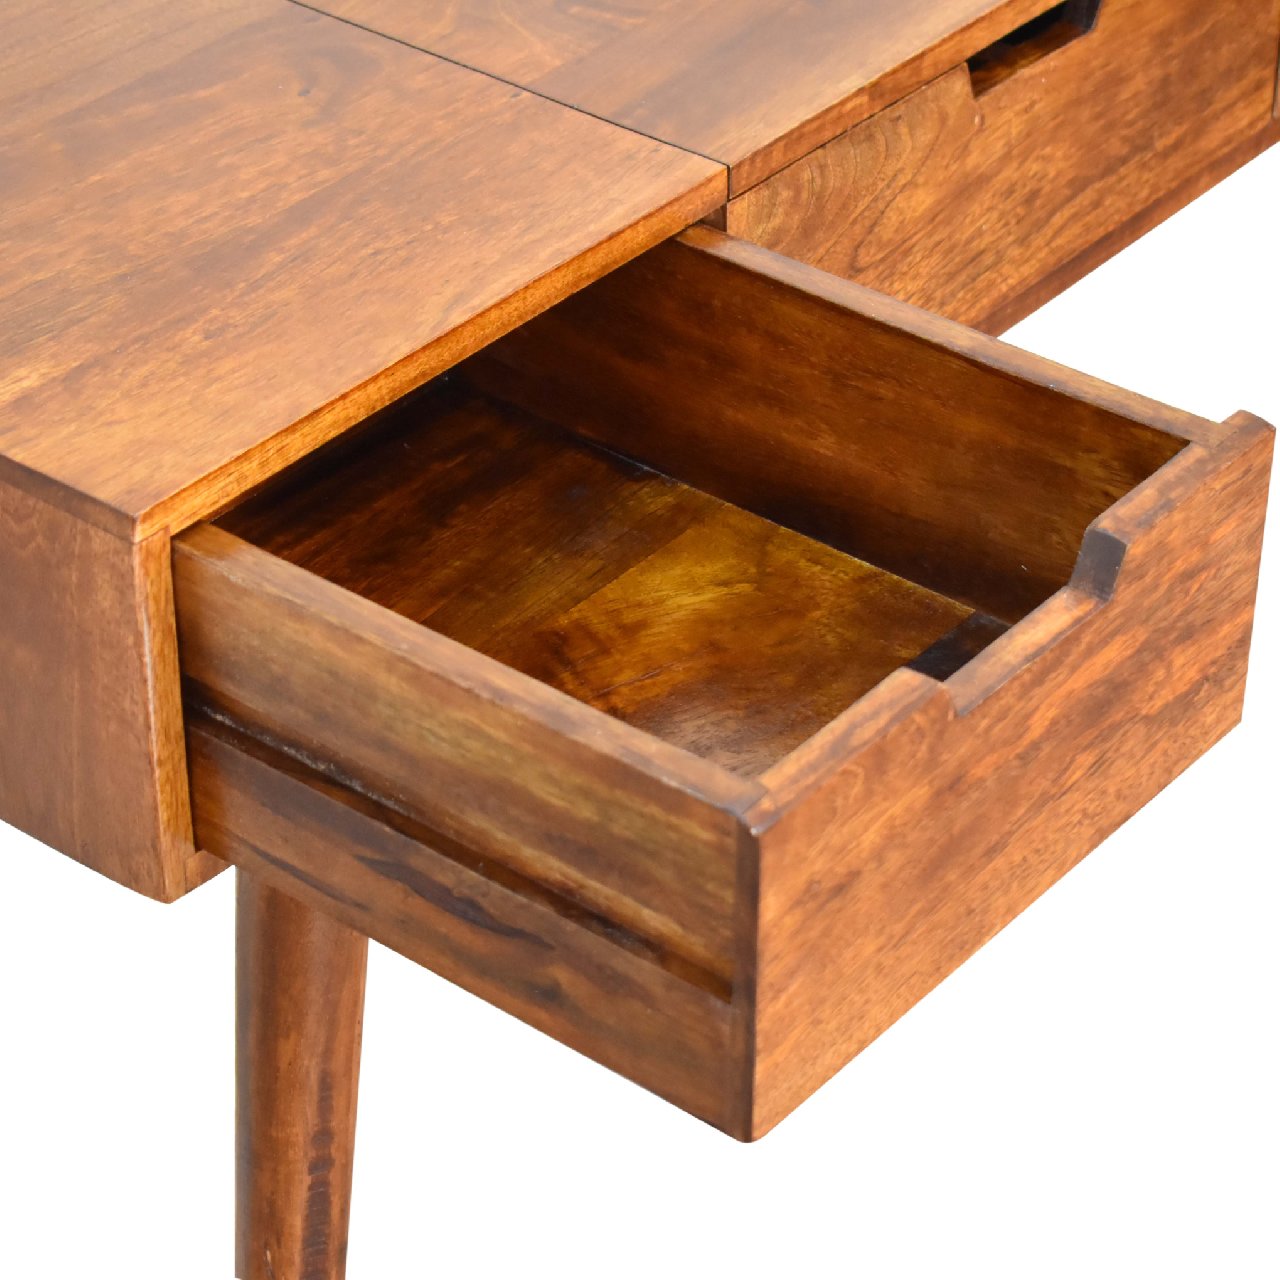 Chestnut Foldable Mirror Table